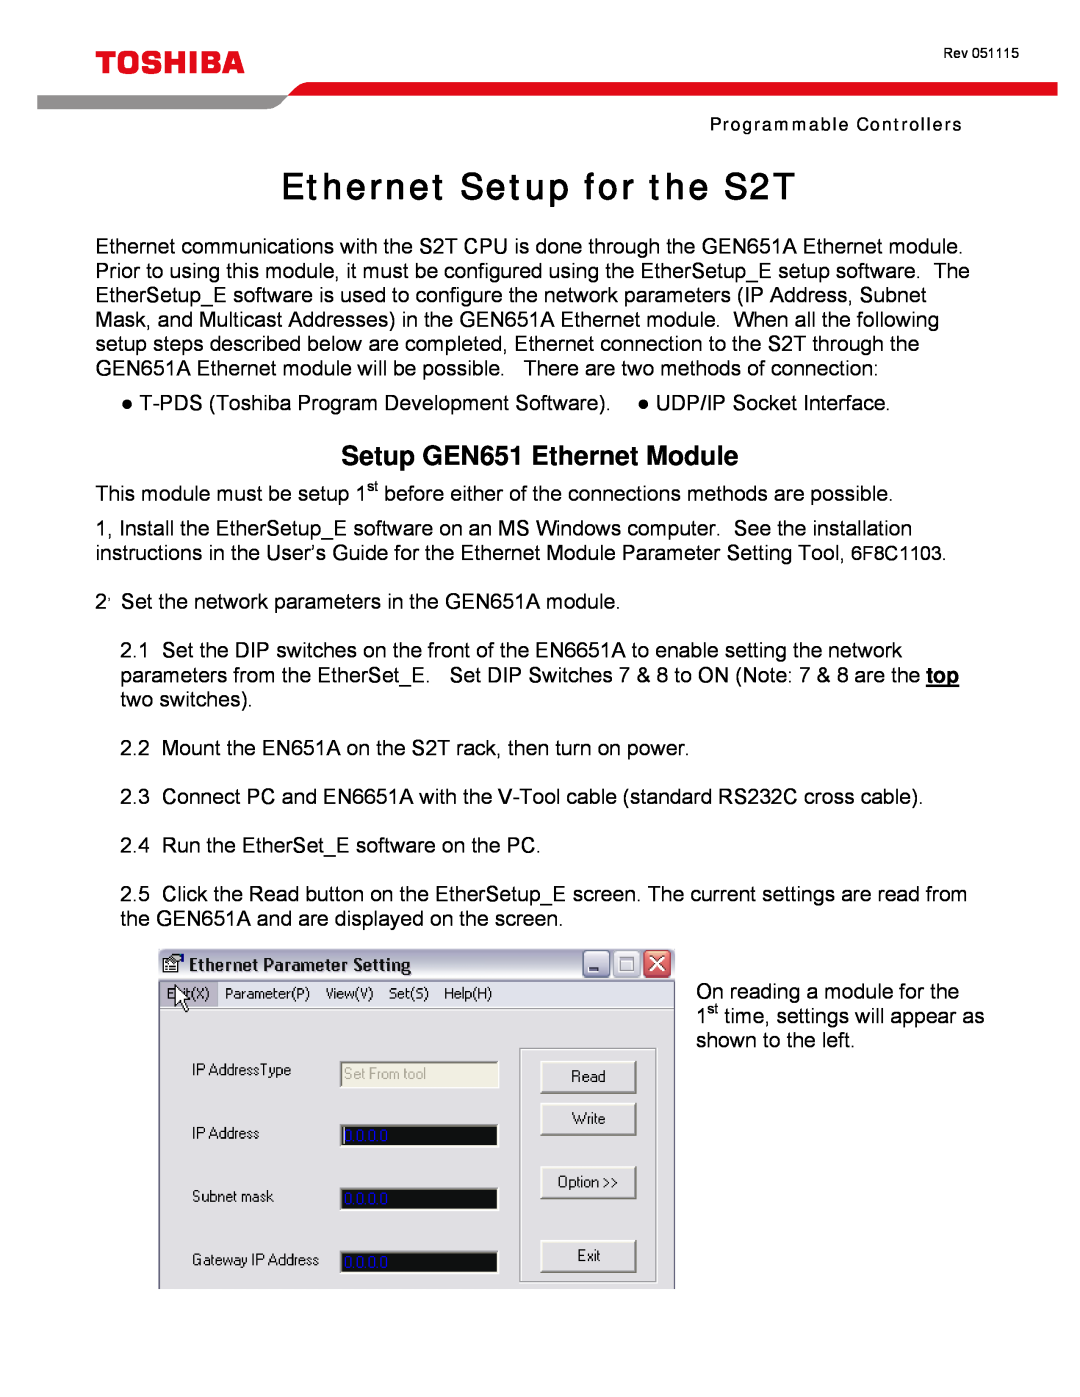 Toshiba installation instructions Setup GEN651 Ethernet Module, Ethernet Setup for the S2T 